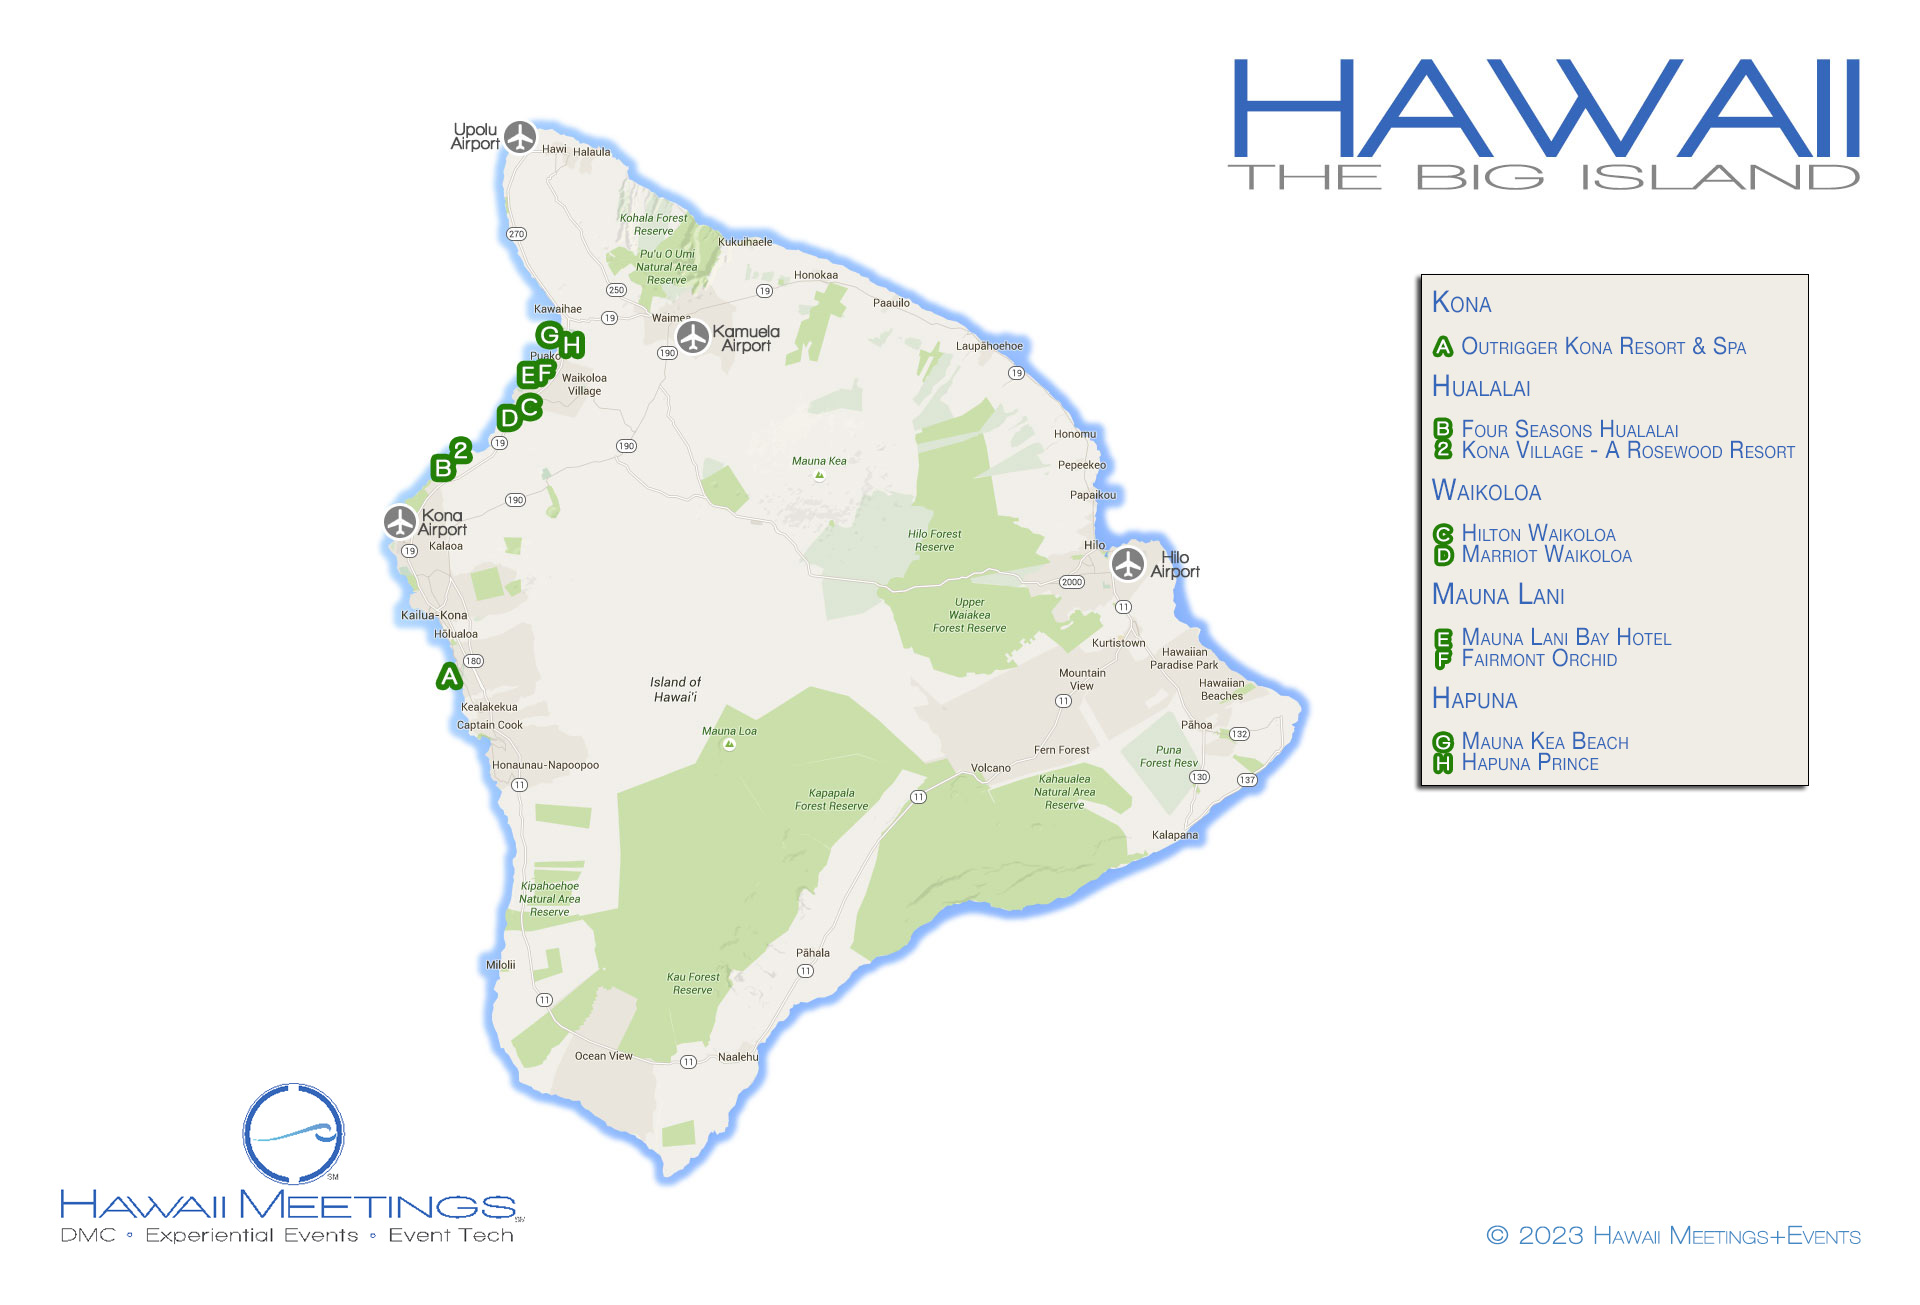 Destinations and Resorts on the Big Island of Hawaii